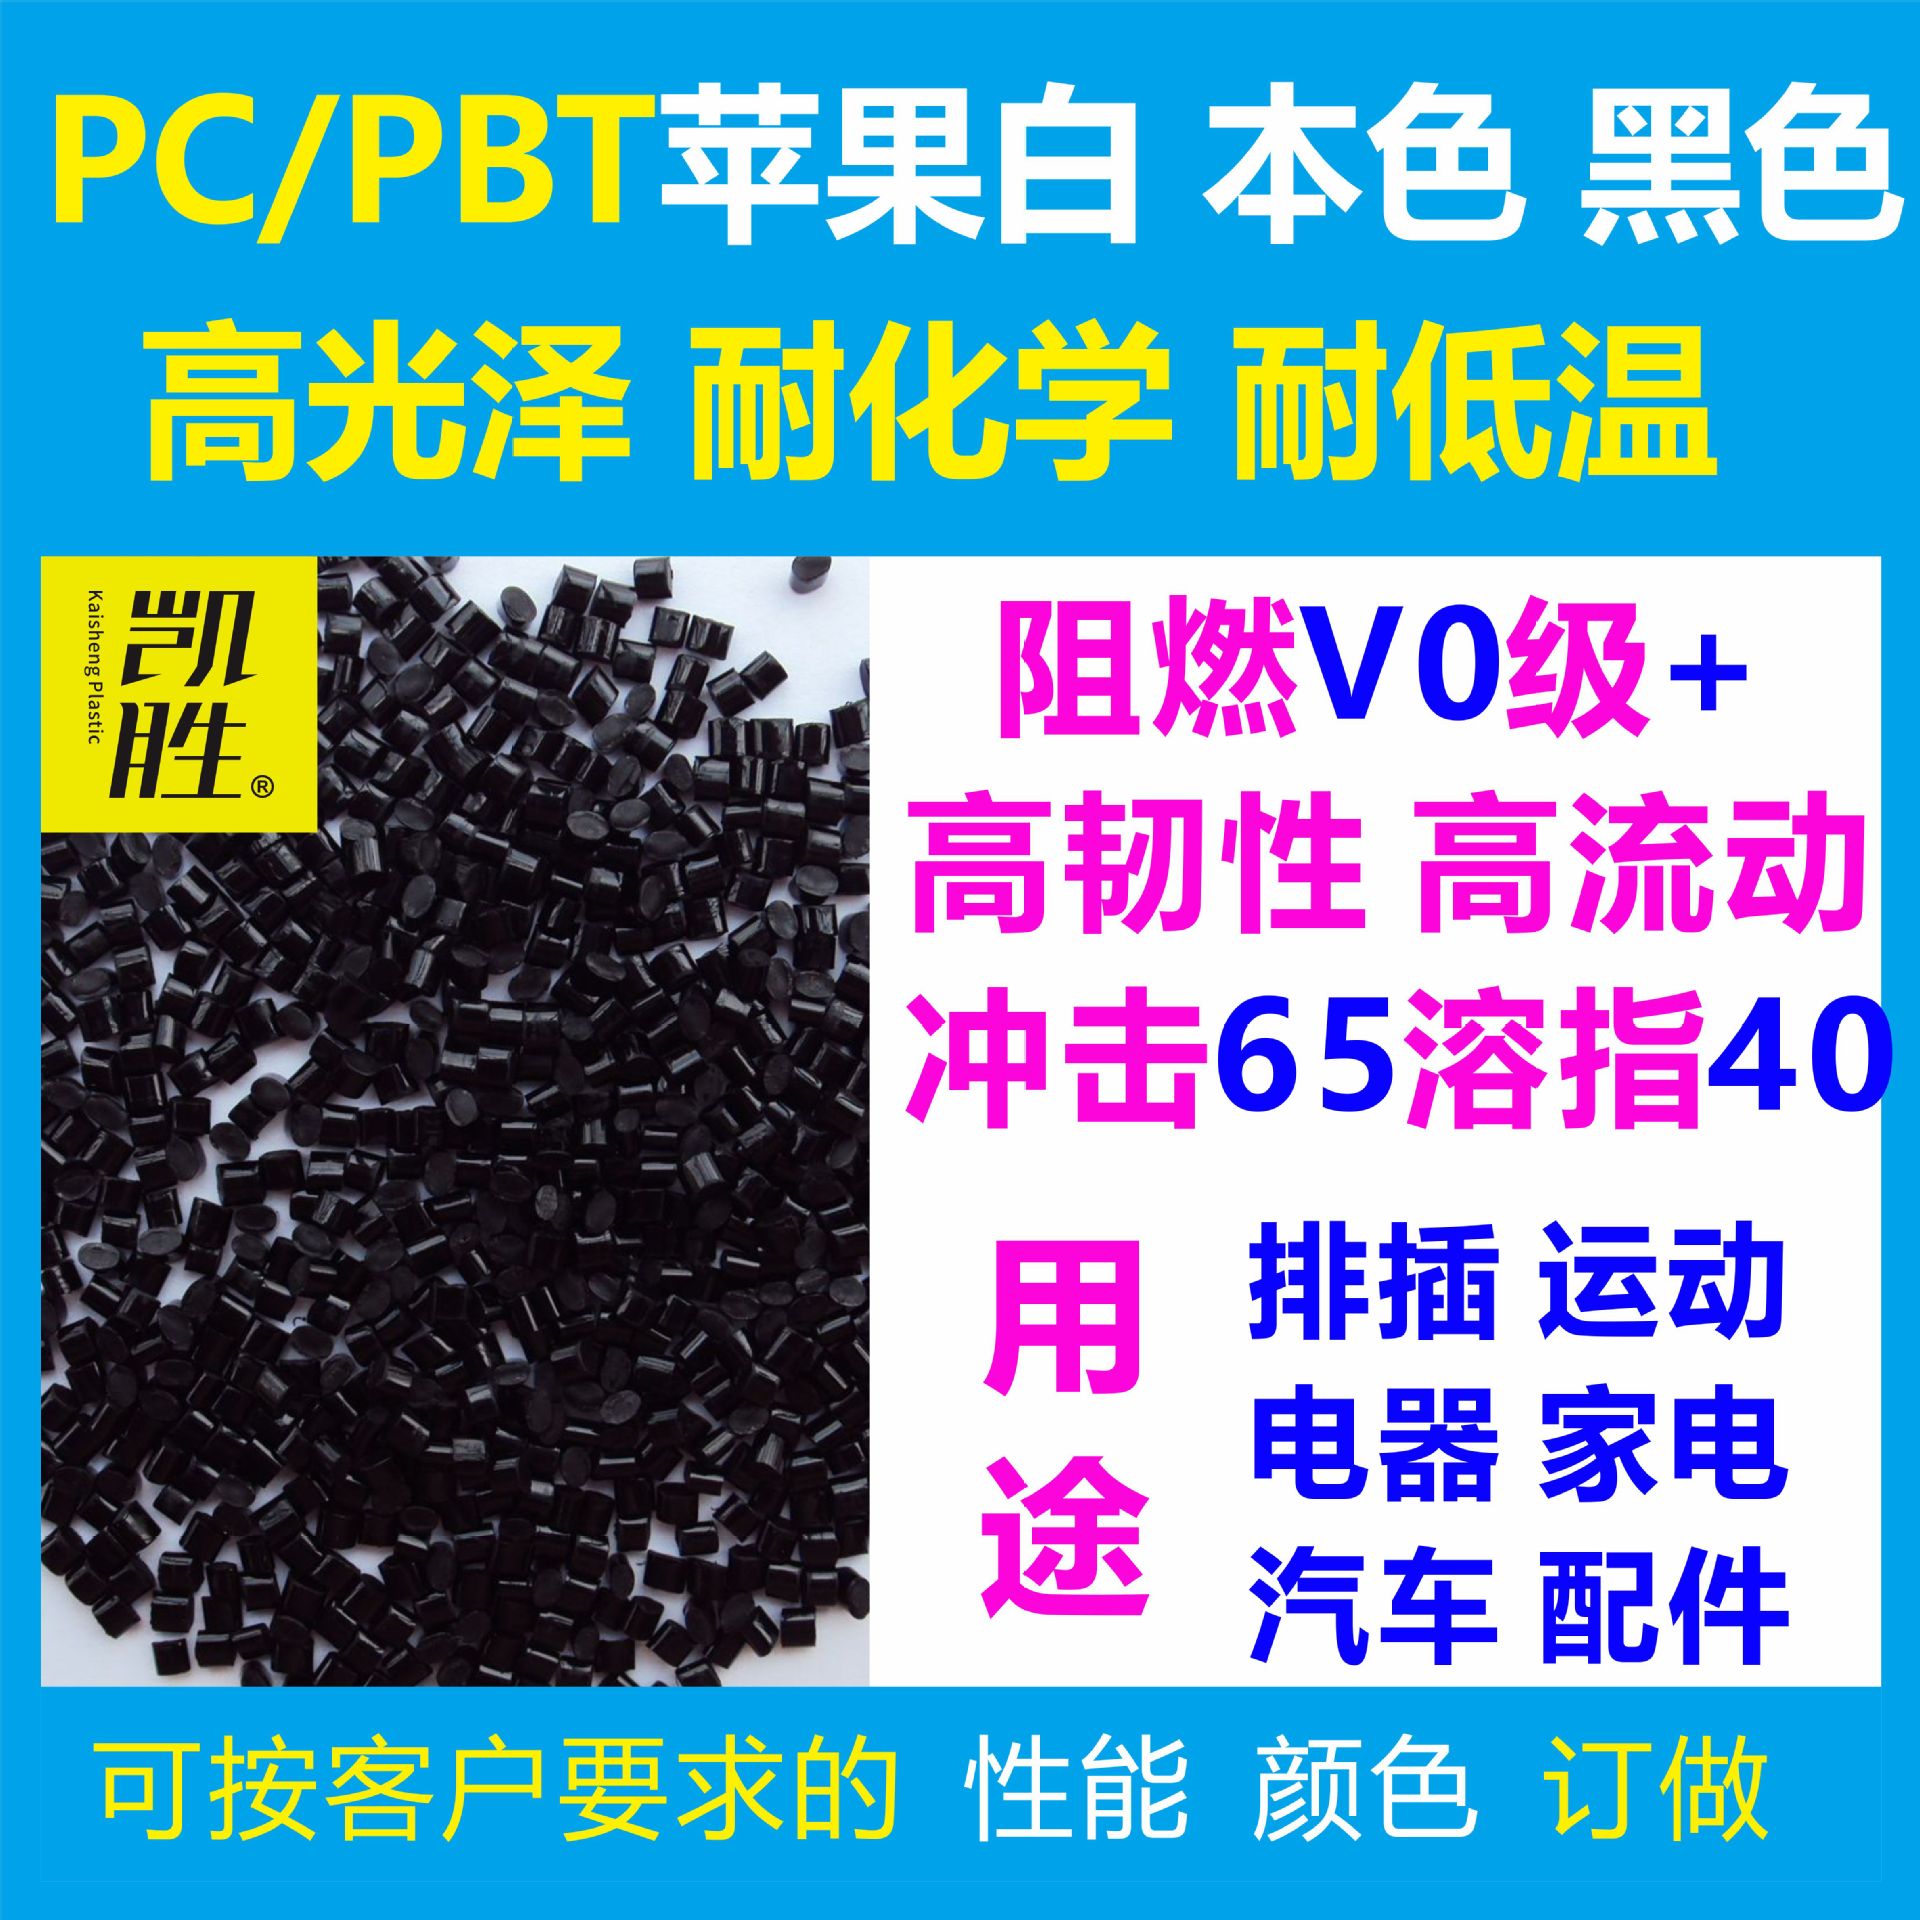 pcpbt Flame retardant Plastic materials Chemistry Low temperature flow pc pbt Fireproof grade plastic